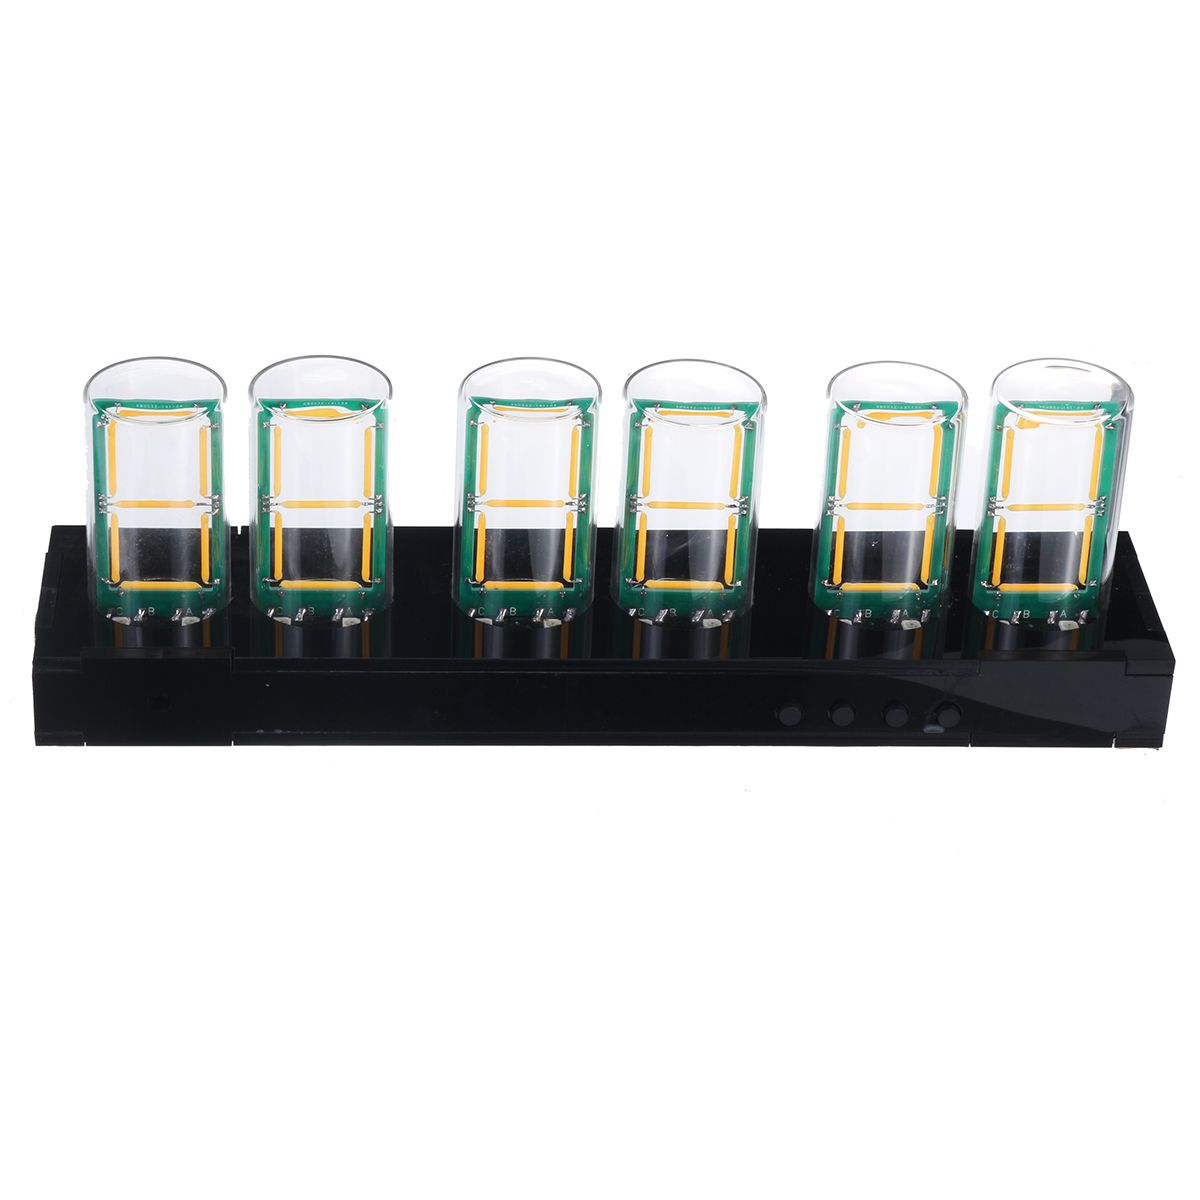 STARK-159-35mm-5V-Six-Tube-LED-Light-Filament-Glow-Clock-Electronic-Digital-Ds1302-Circuit-Board-DIY-1566445